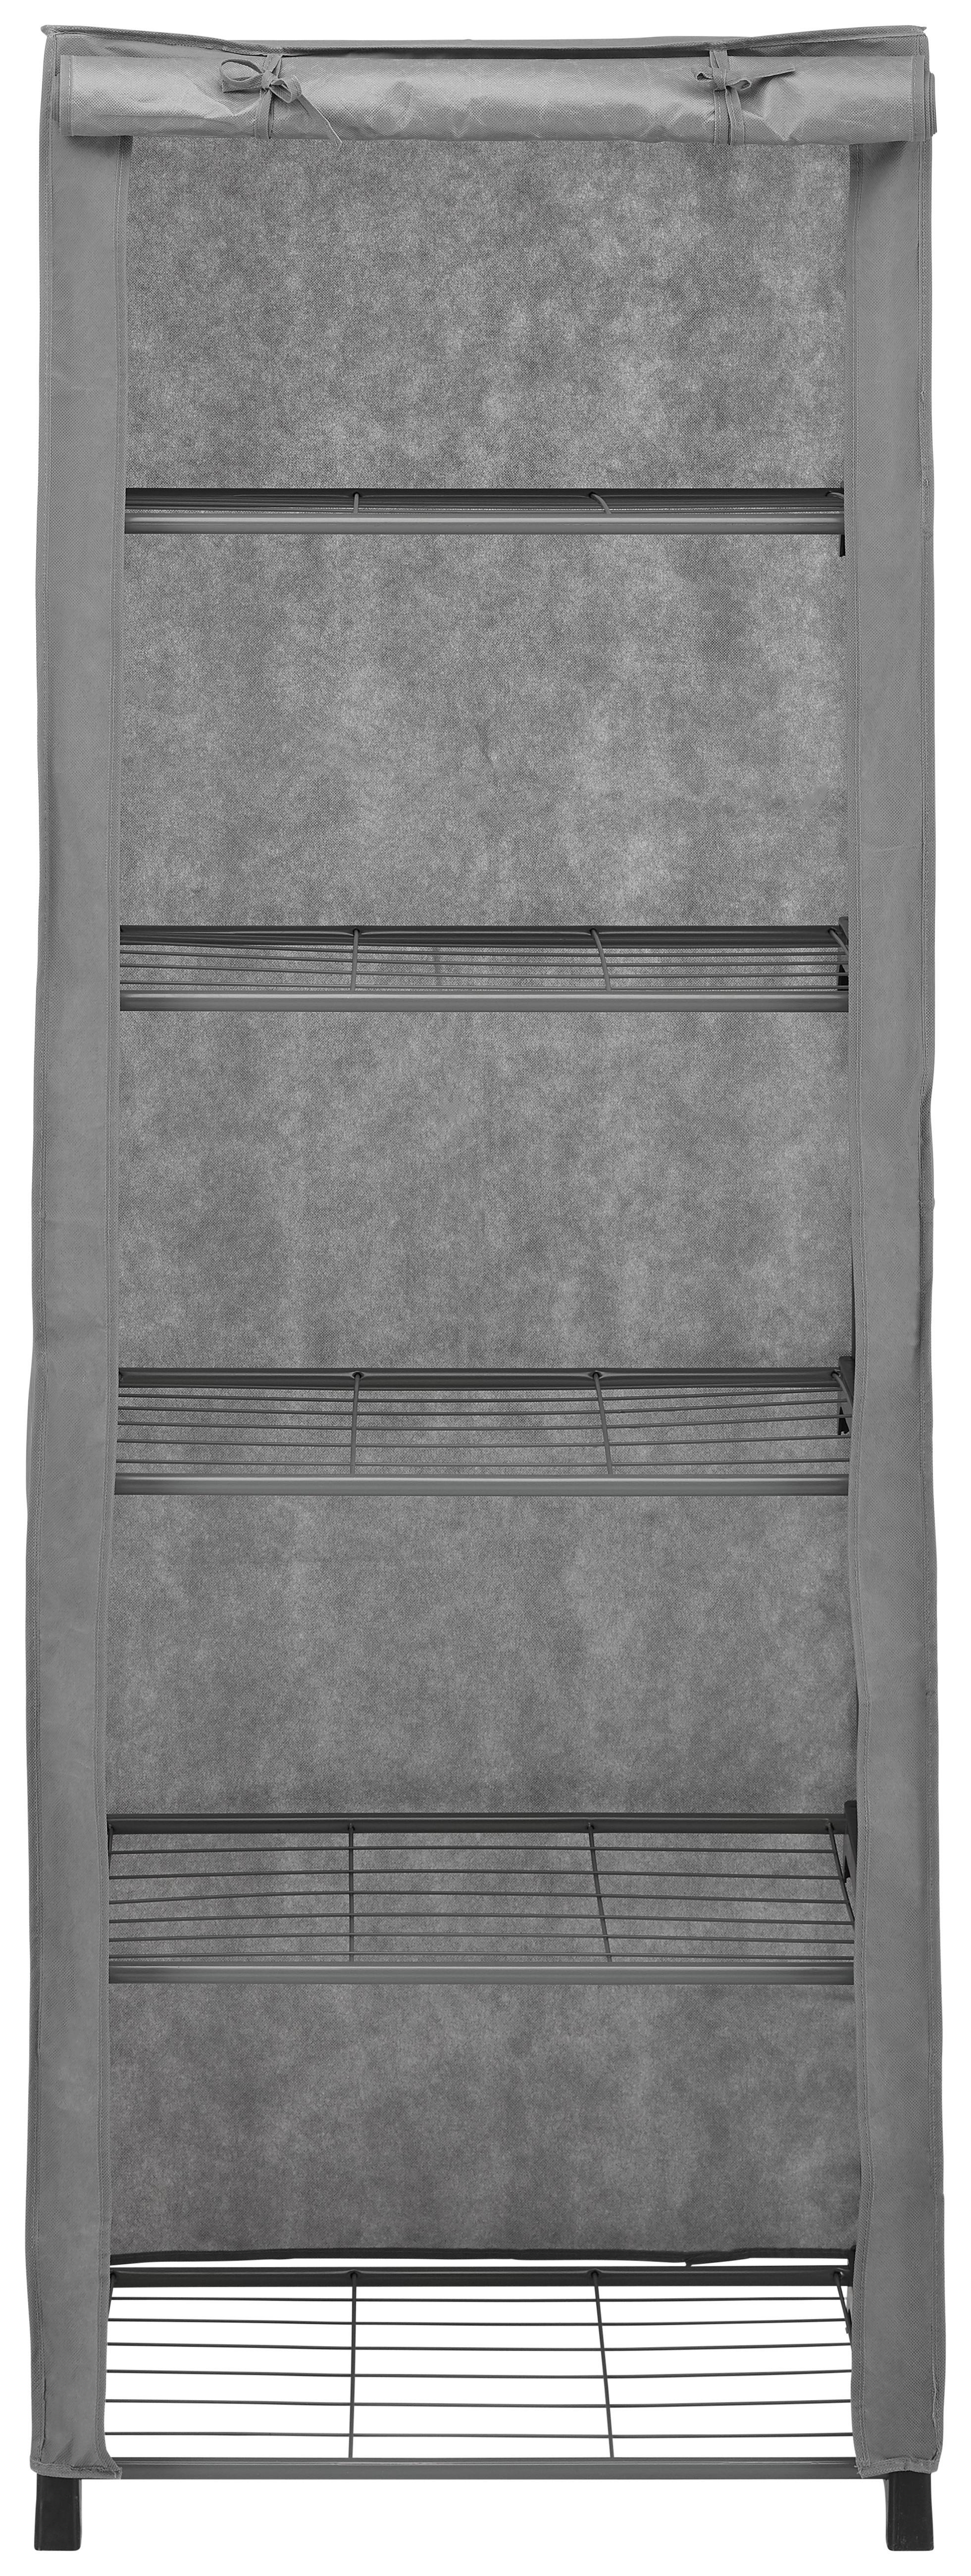 Stoffschrank in Grau - Grau, Textil/Metall (60/176/50cm) - Modern Living